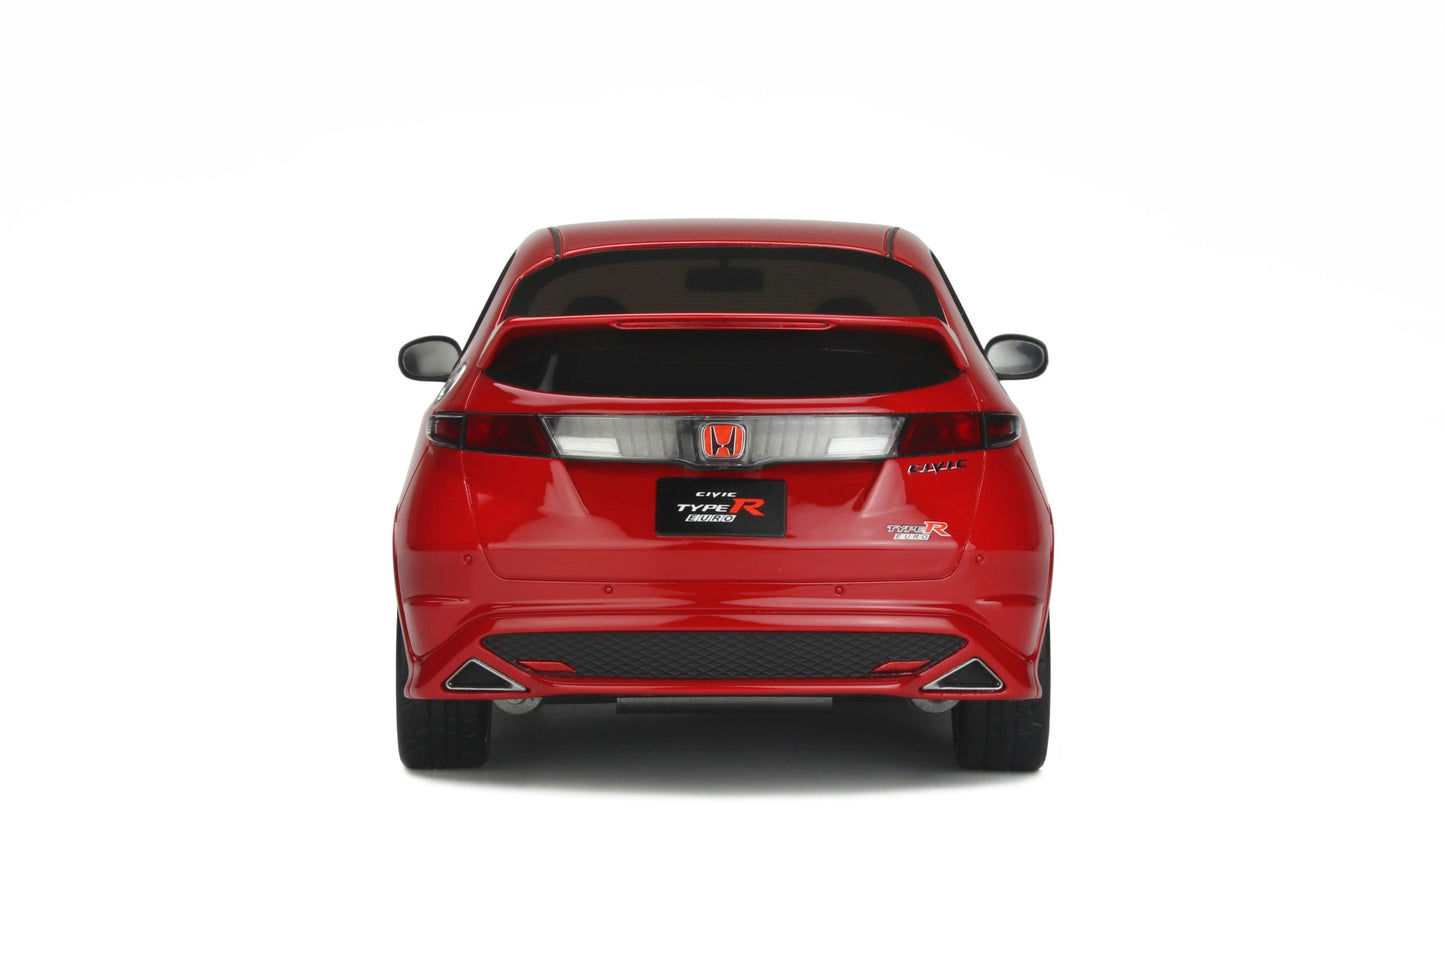 OttOmobile - Honda Civic Type R (FN2) (Euro Red) 1:18 Scale Model Car